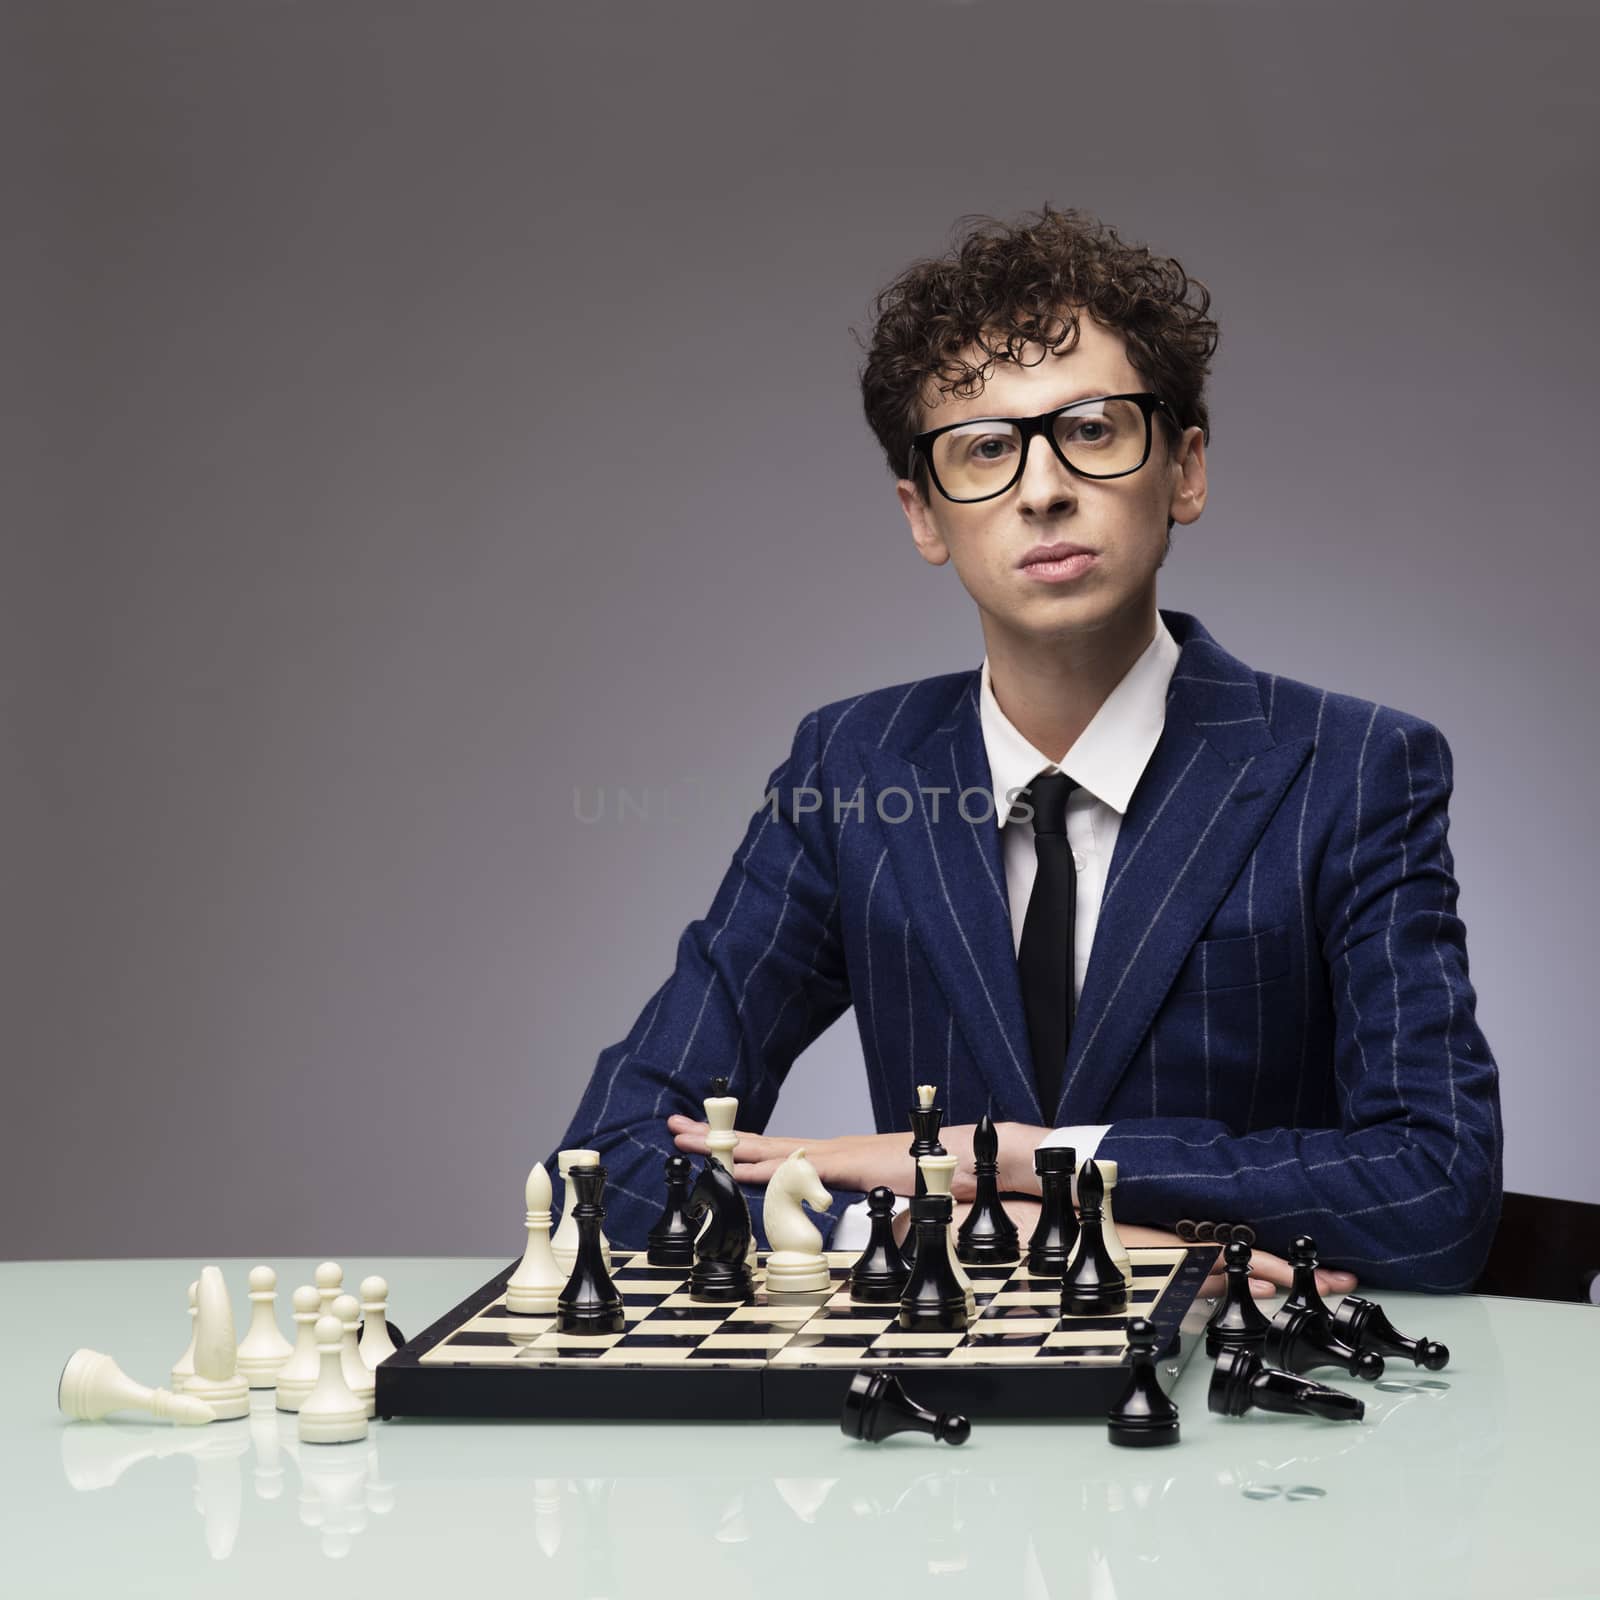 Studio portrait of successful man playing chess